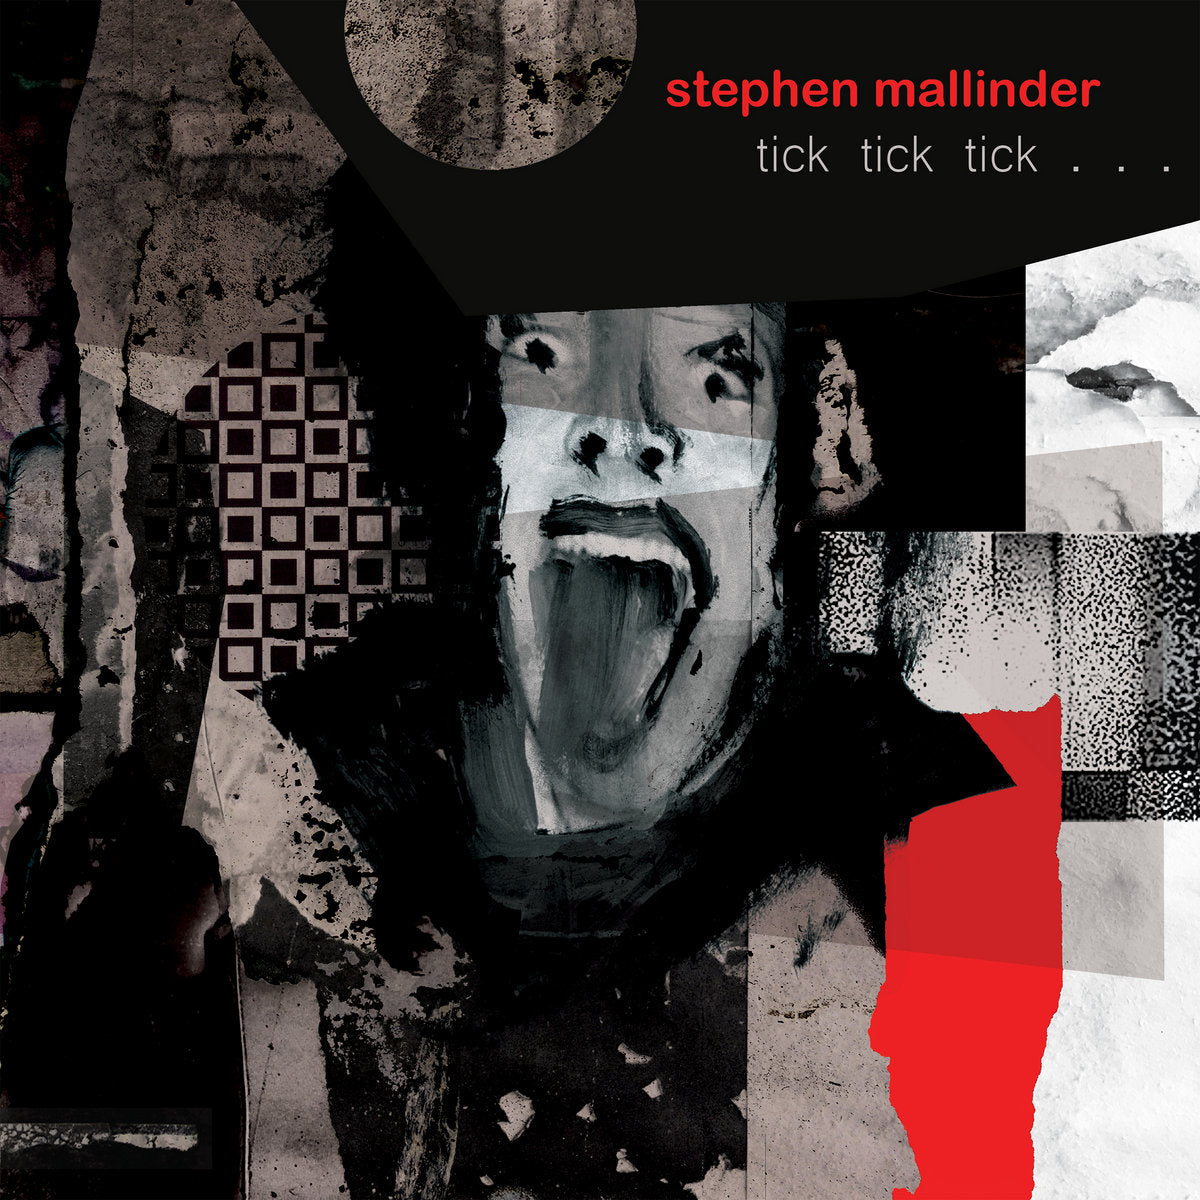 STEPHEN MALLINDER - TICK TICK TICK Vinyl LP